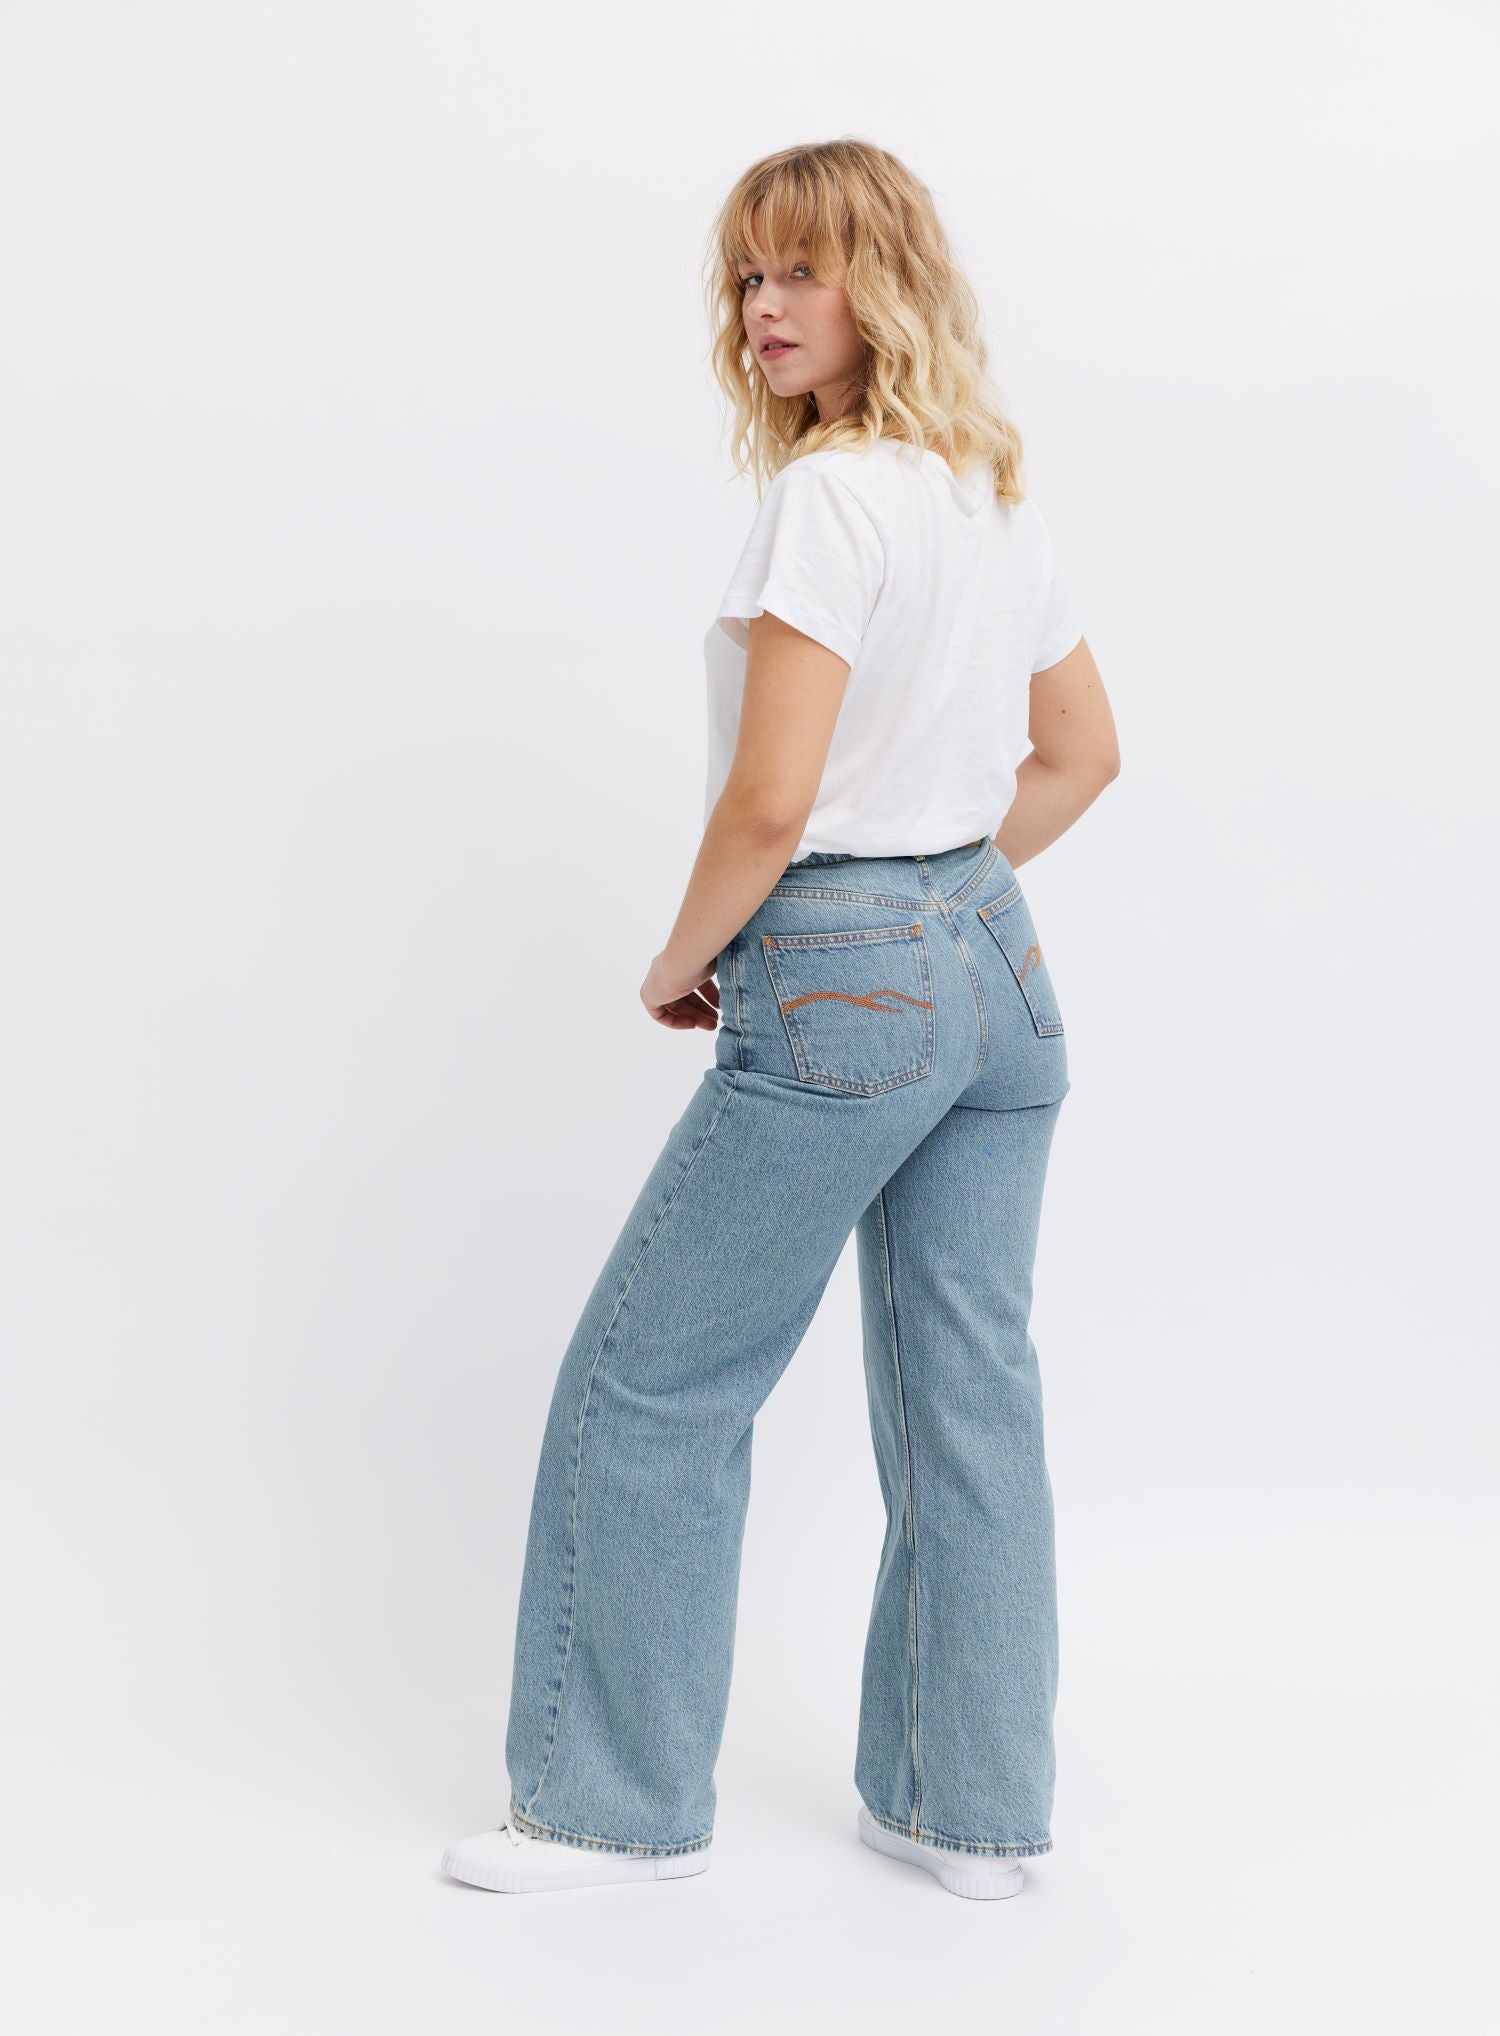 AirDuka - Women's Cotton Skinny Fit Body Shaper Jean Trousers